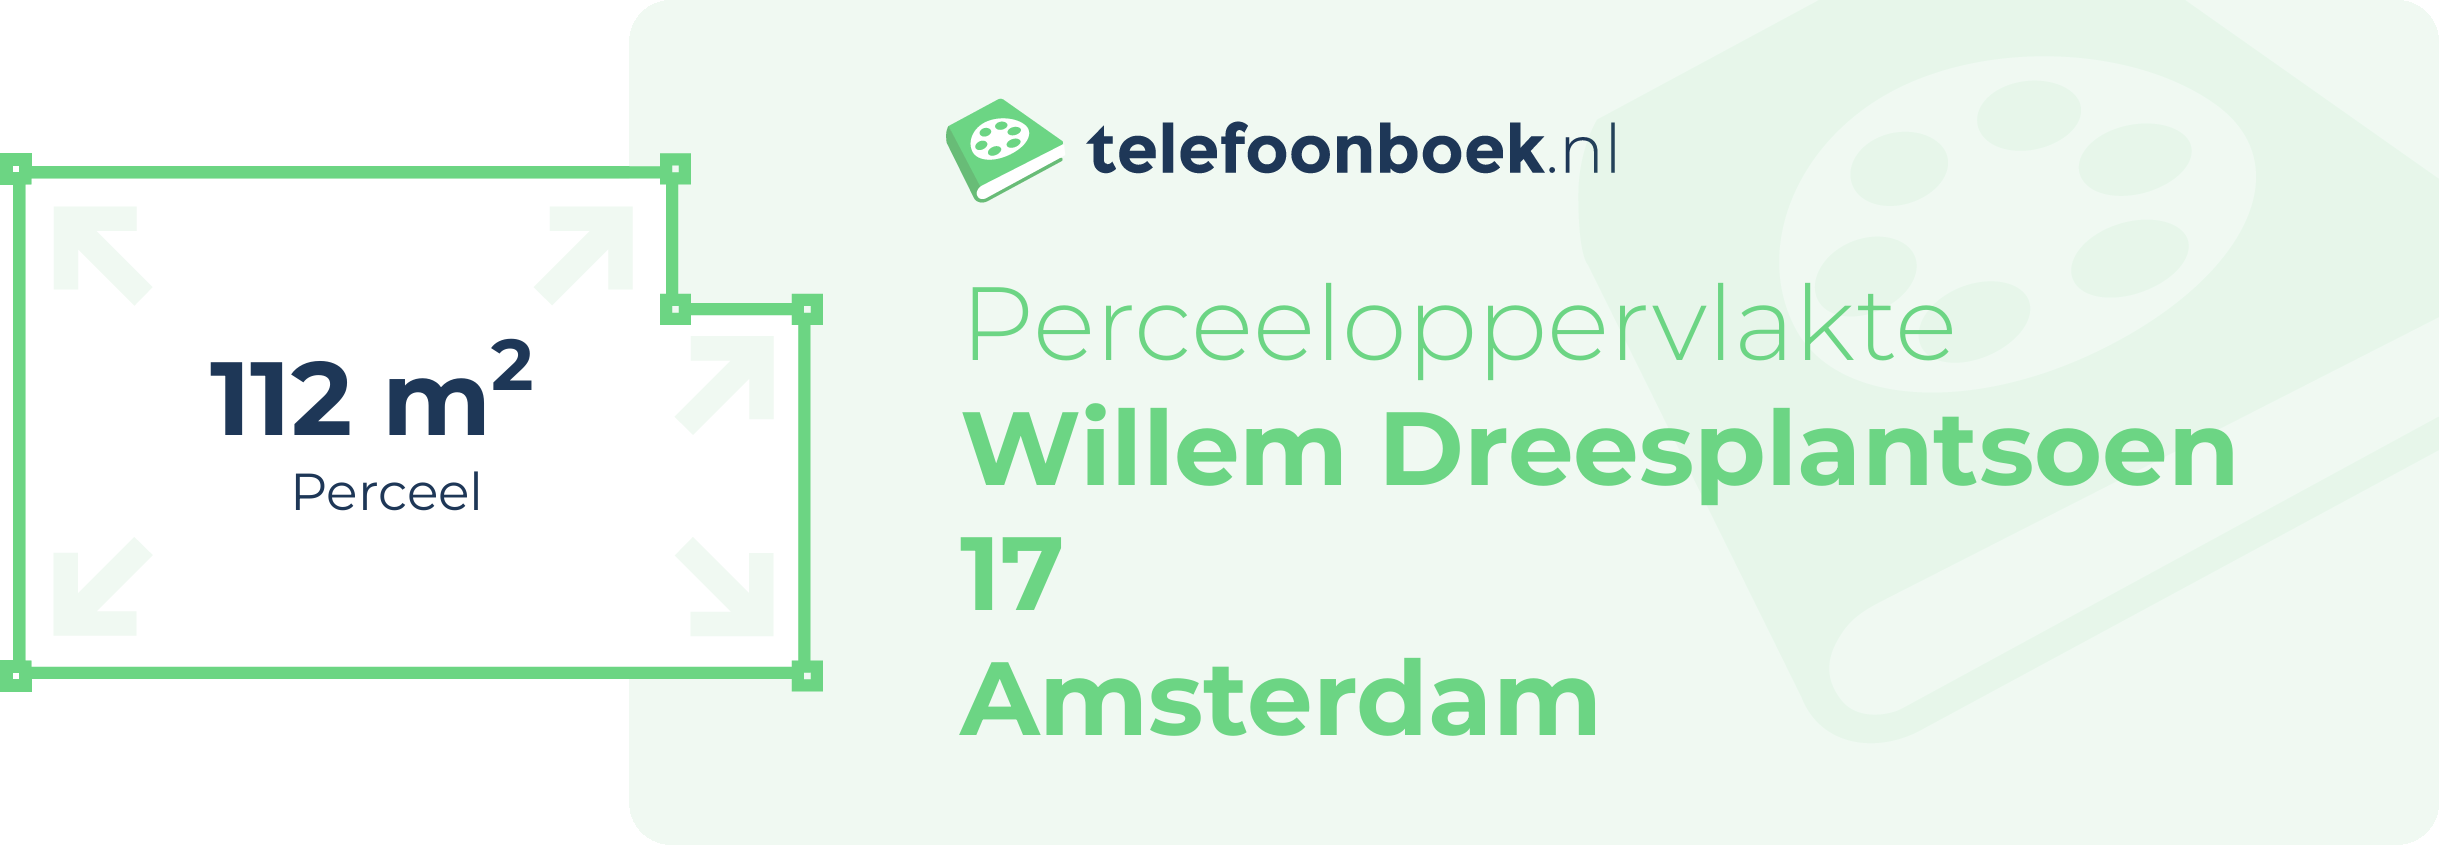 Perceeloppervlakte Willem Dreesplantsoen 17 Amsterdam